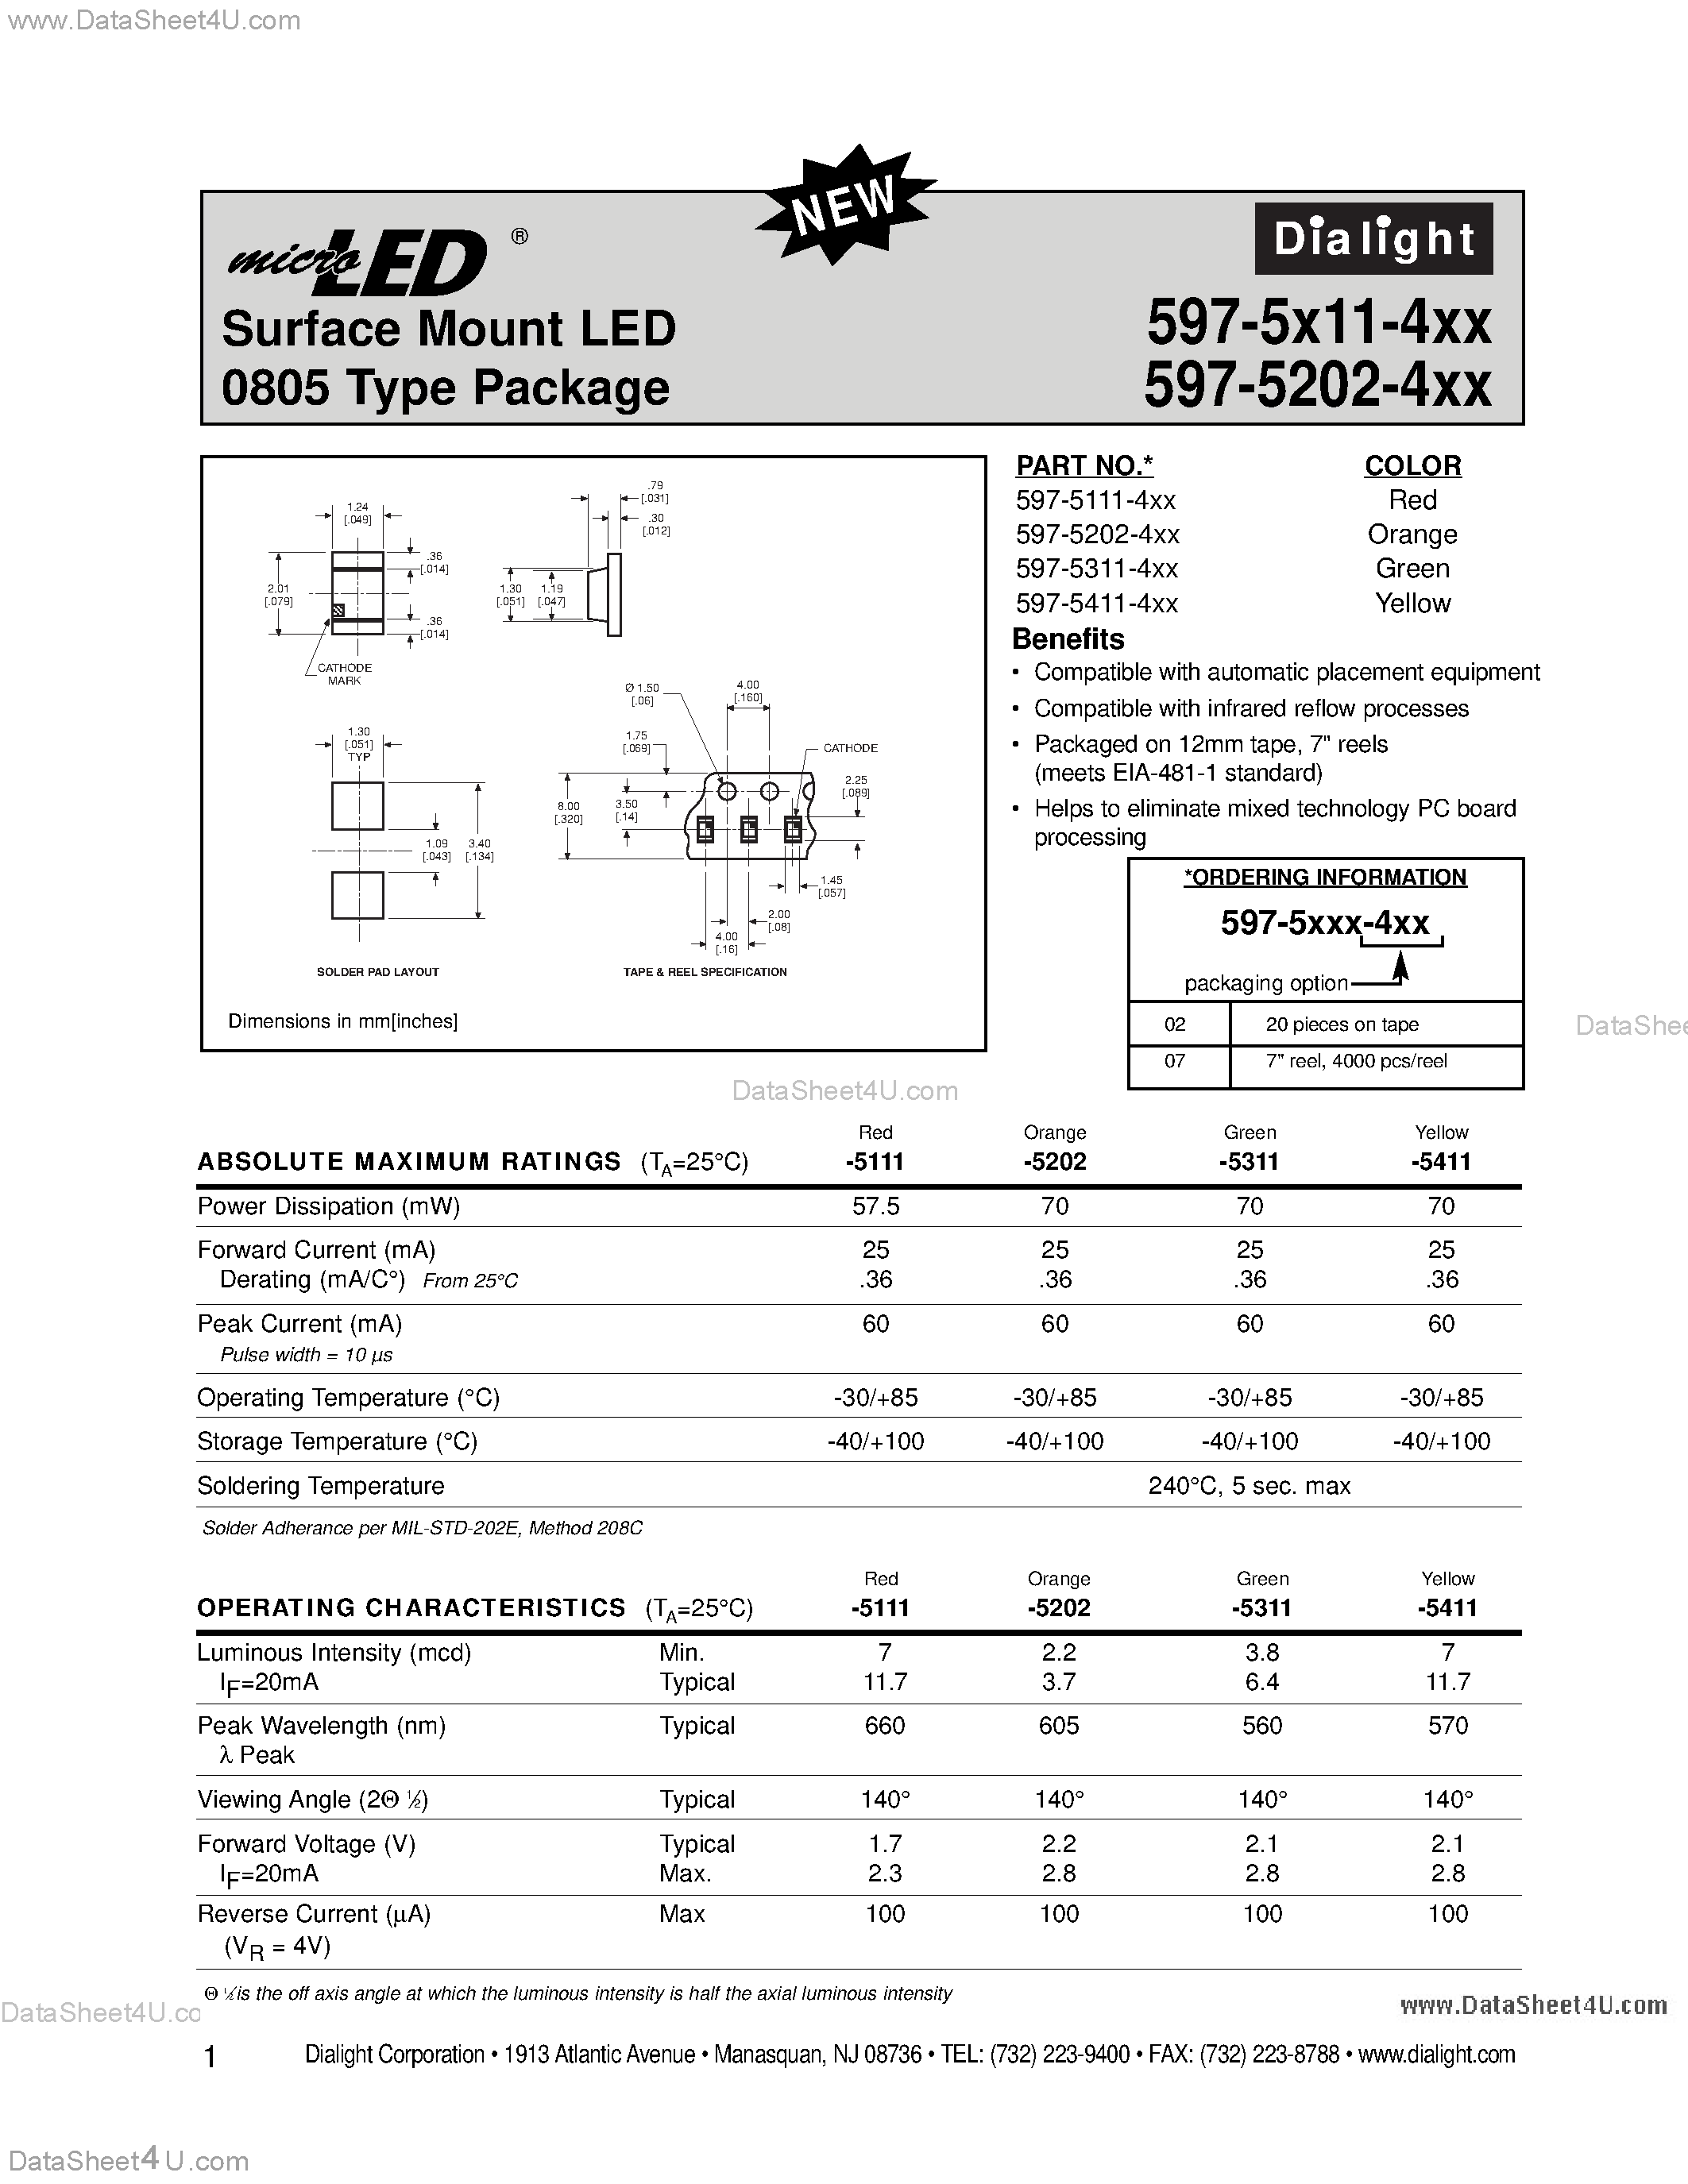 Datasheet 597-5004-4xx - (597-5xxx-4xx) Surface Mount LED page 1